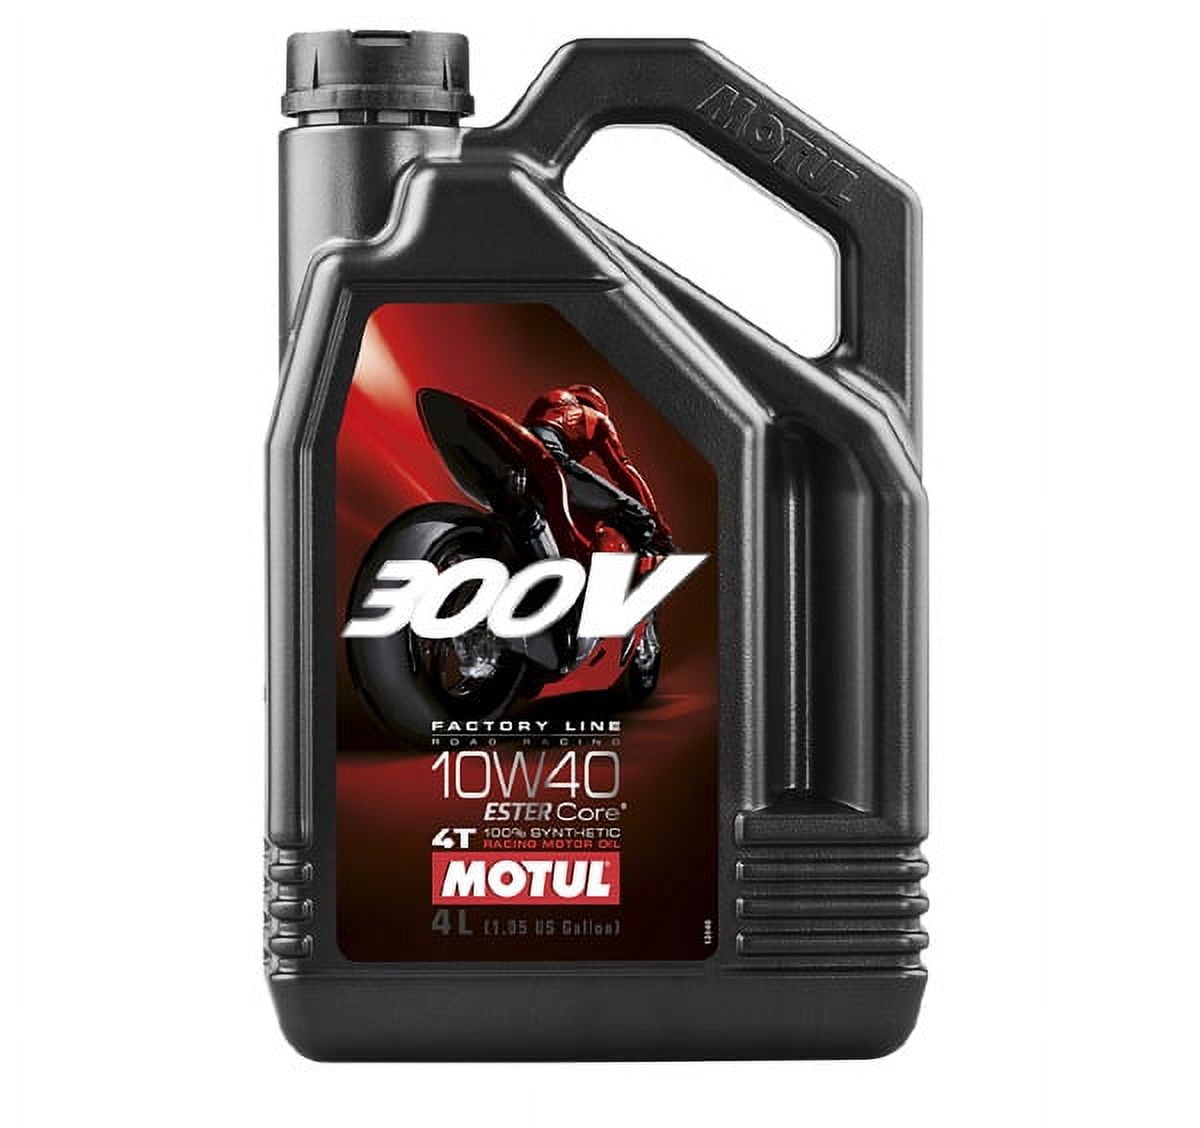 Motul 300V 4T Factory Line 10W 40 Synthetic Oil 4 Liters (104121) 